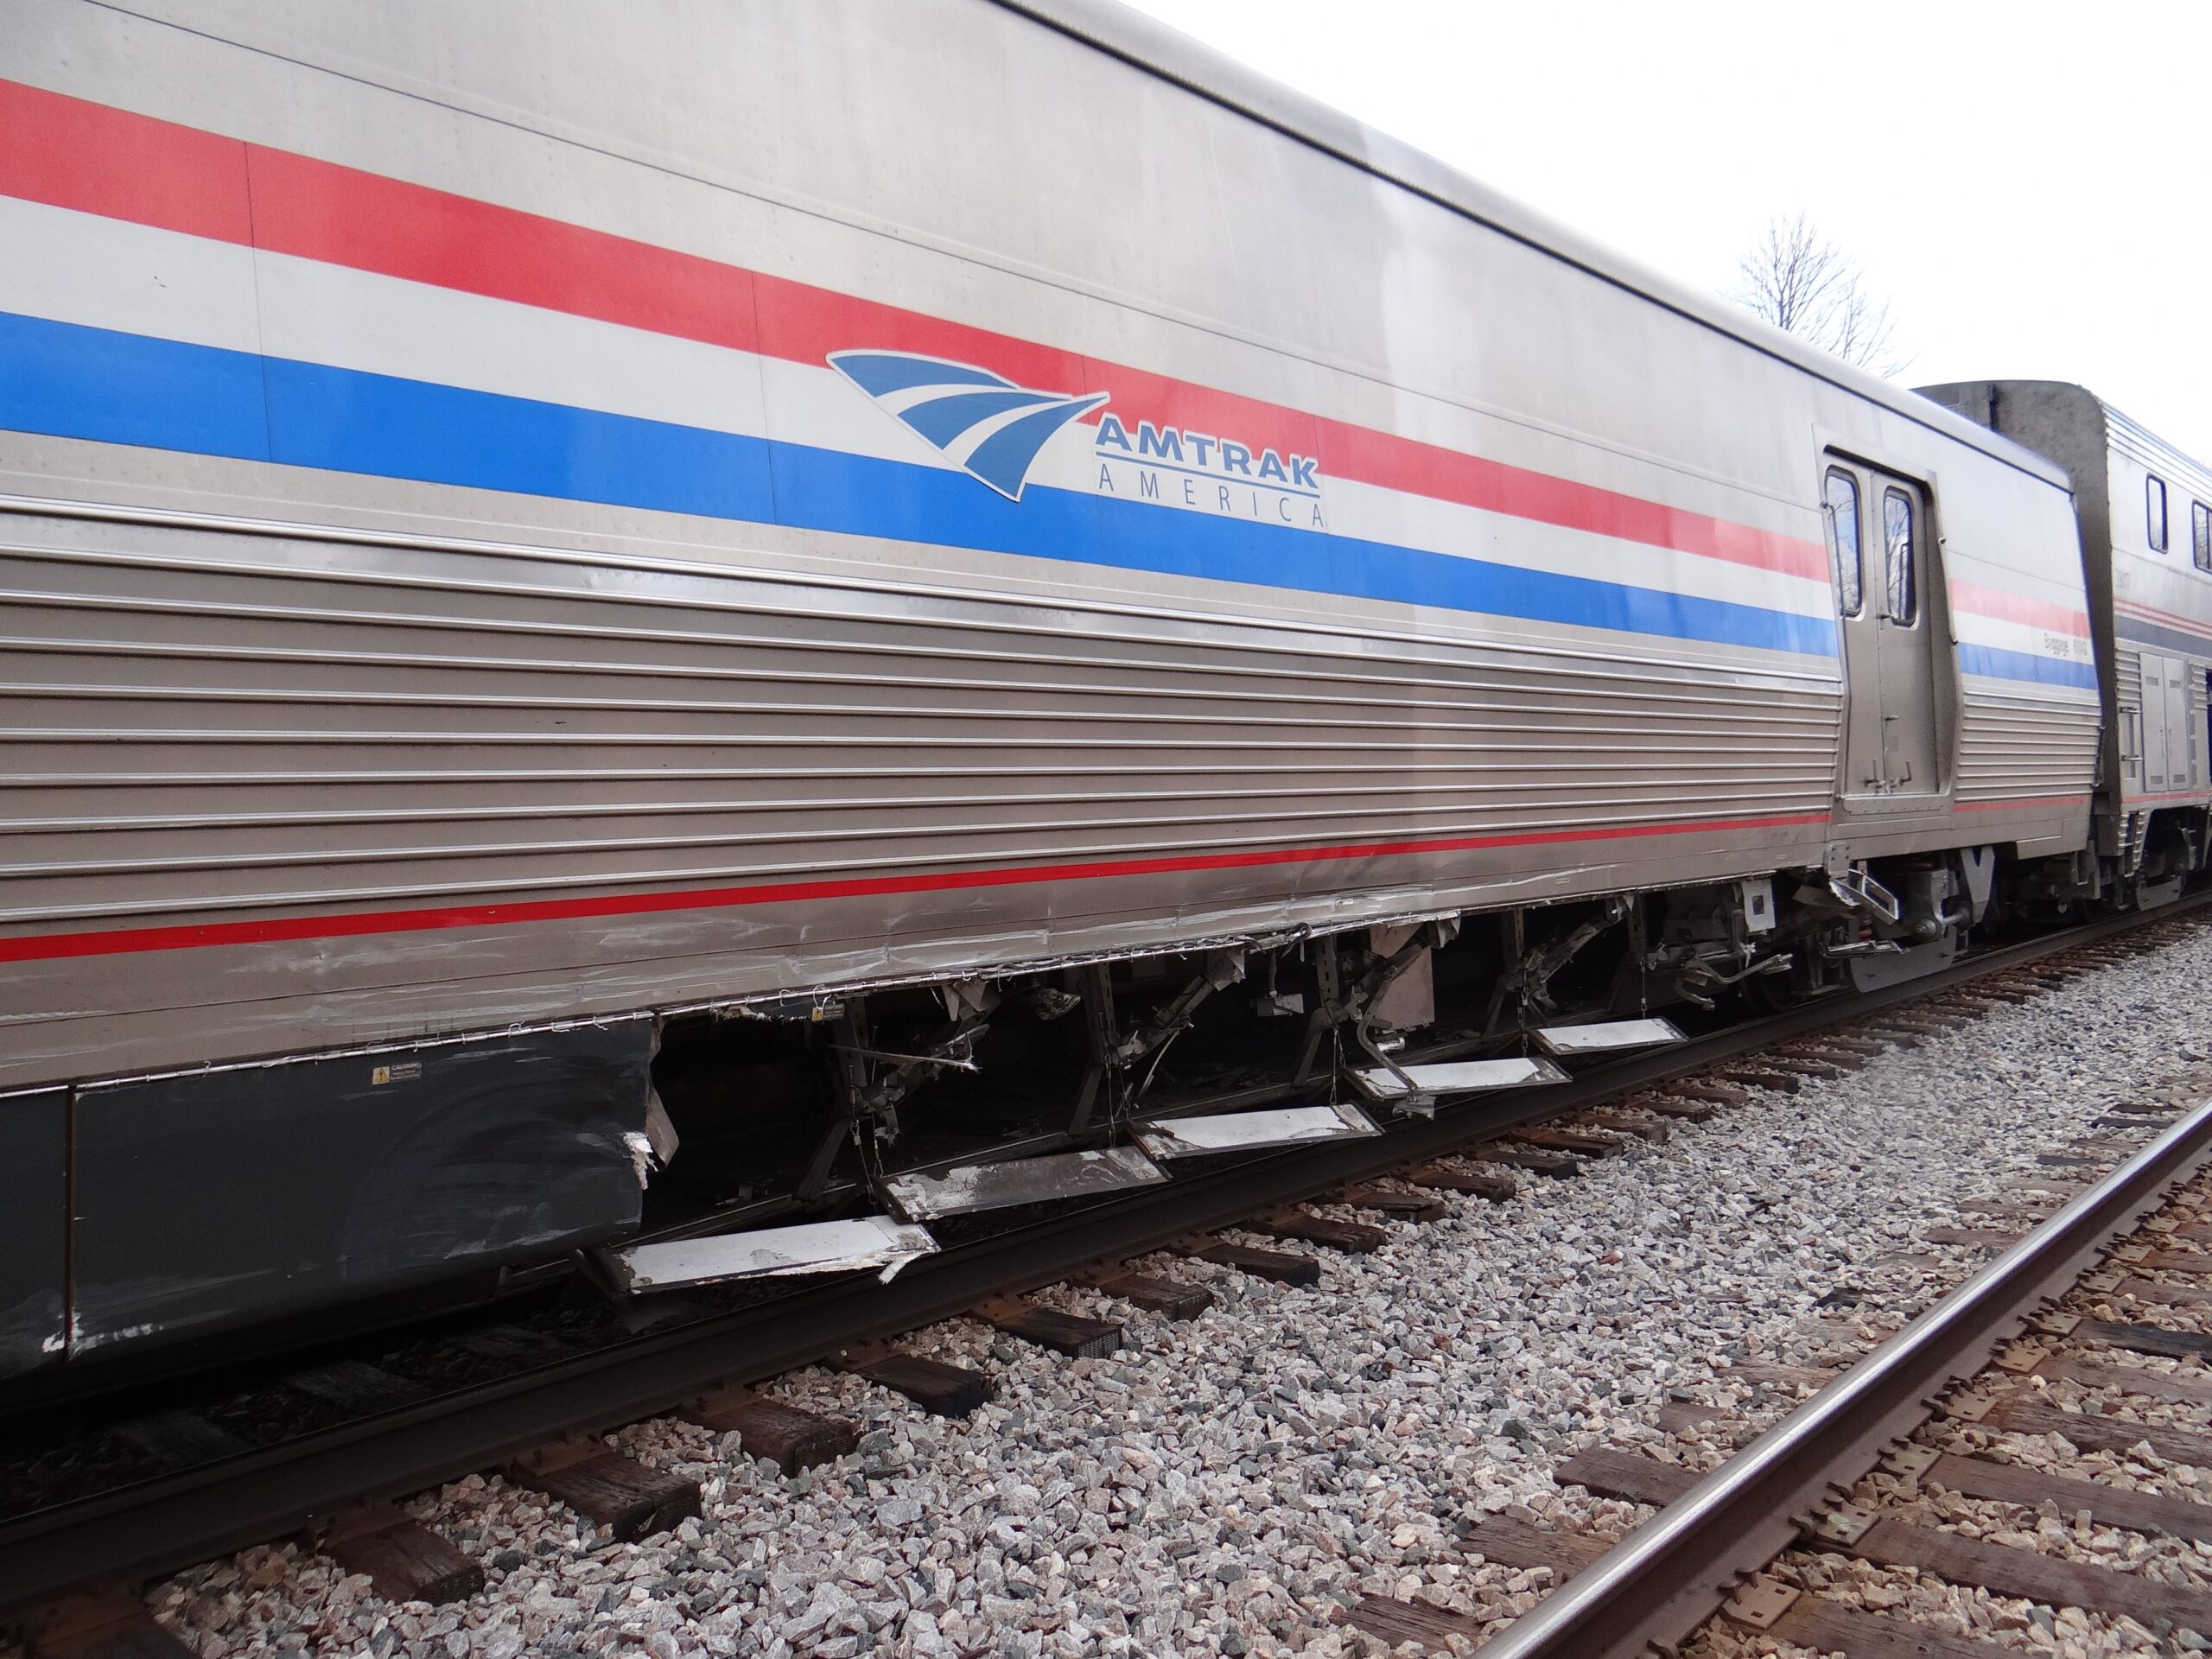 1 Injured In Train Collision Near Columbus